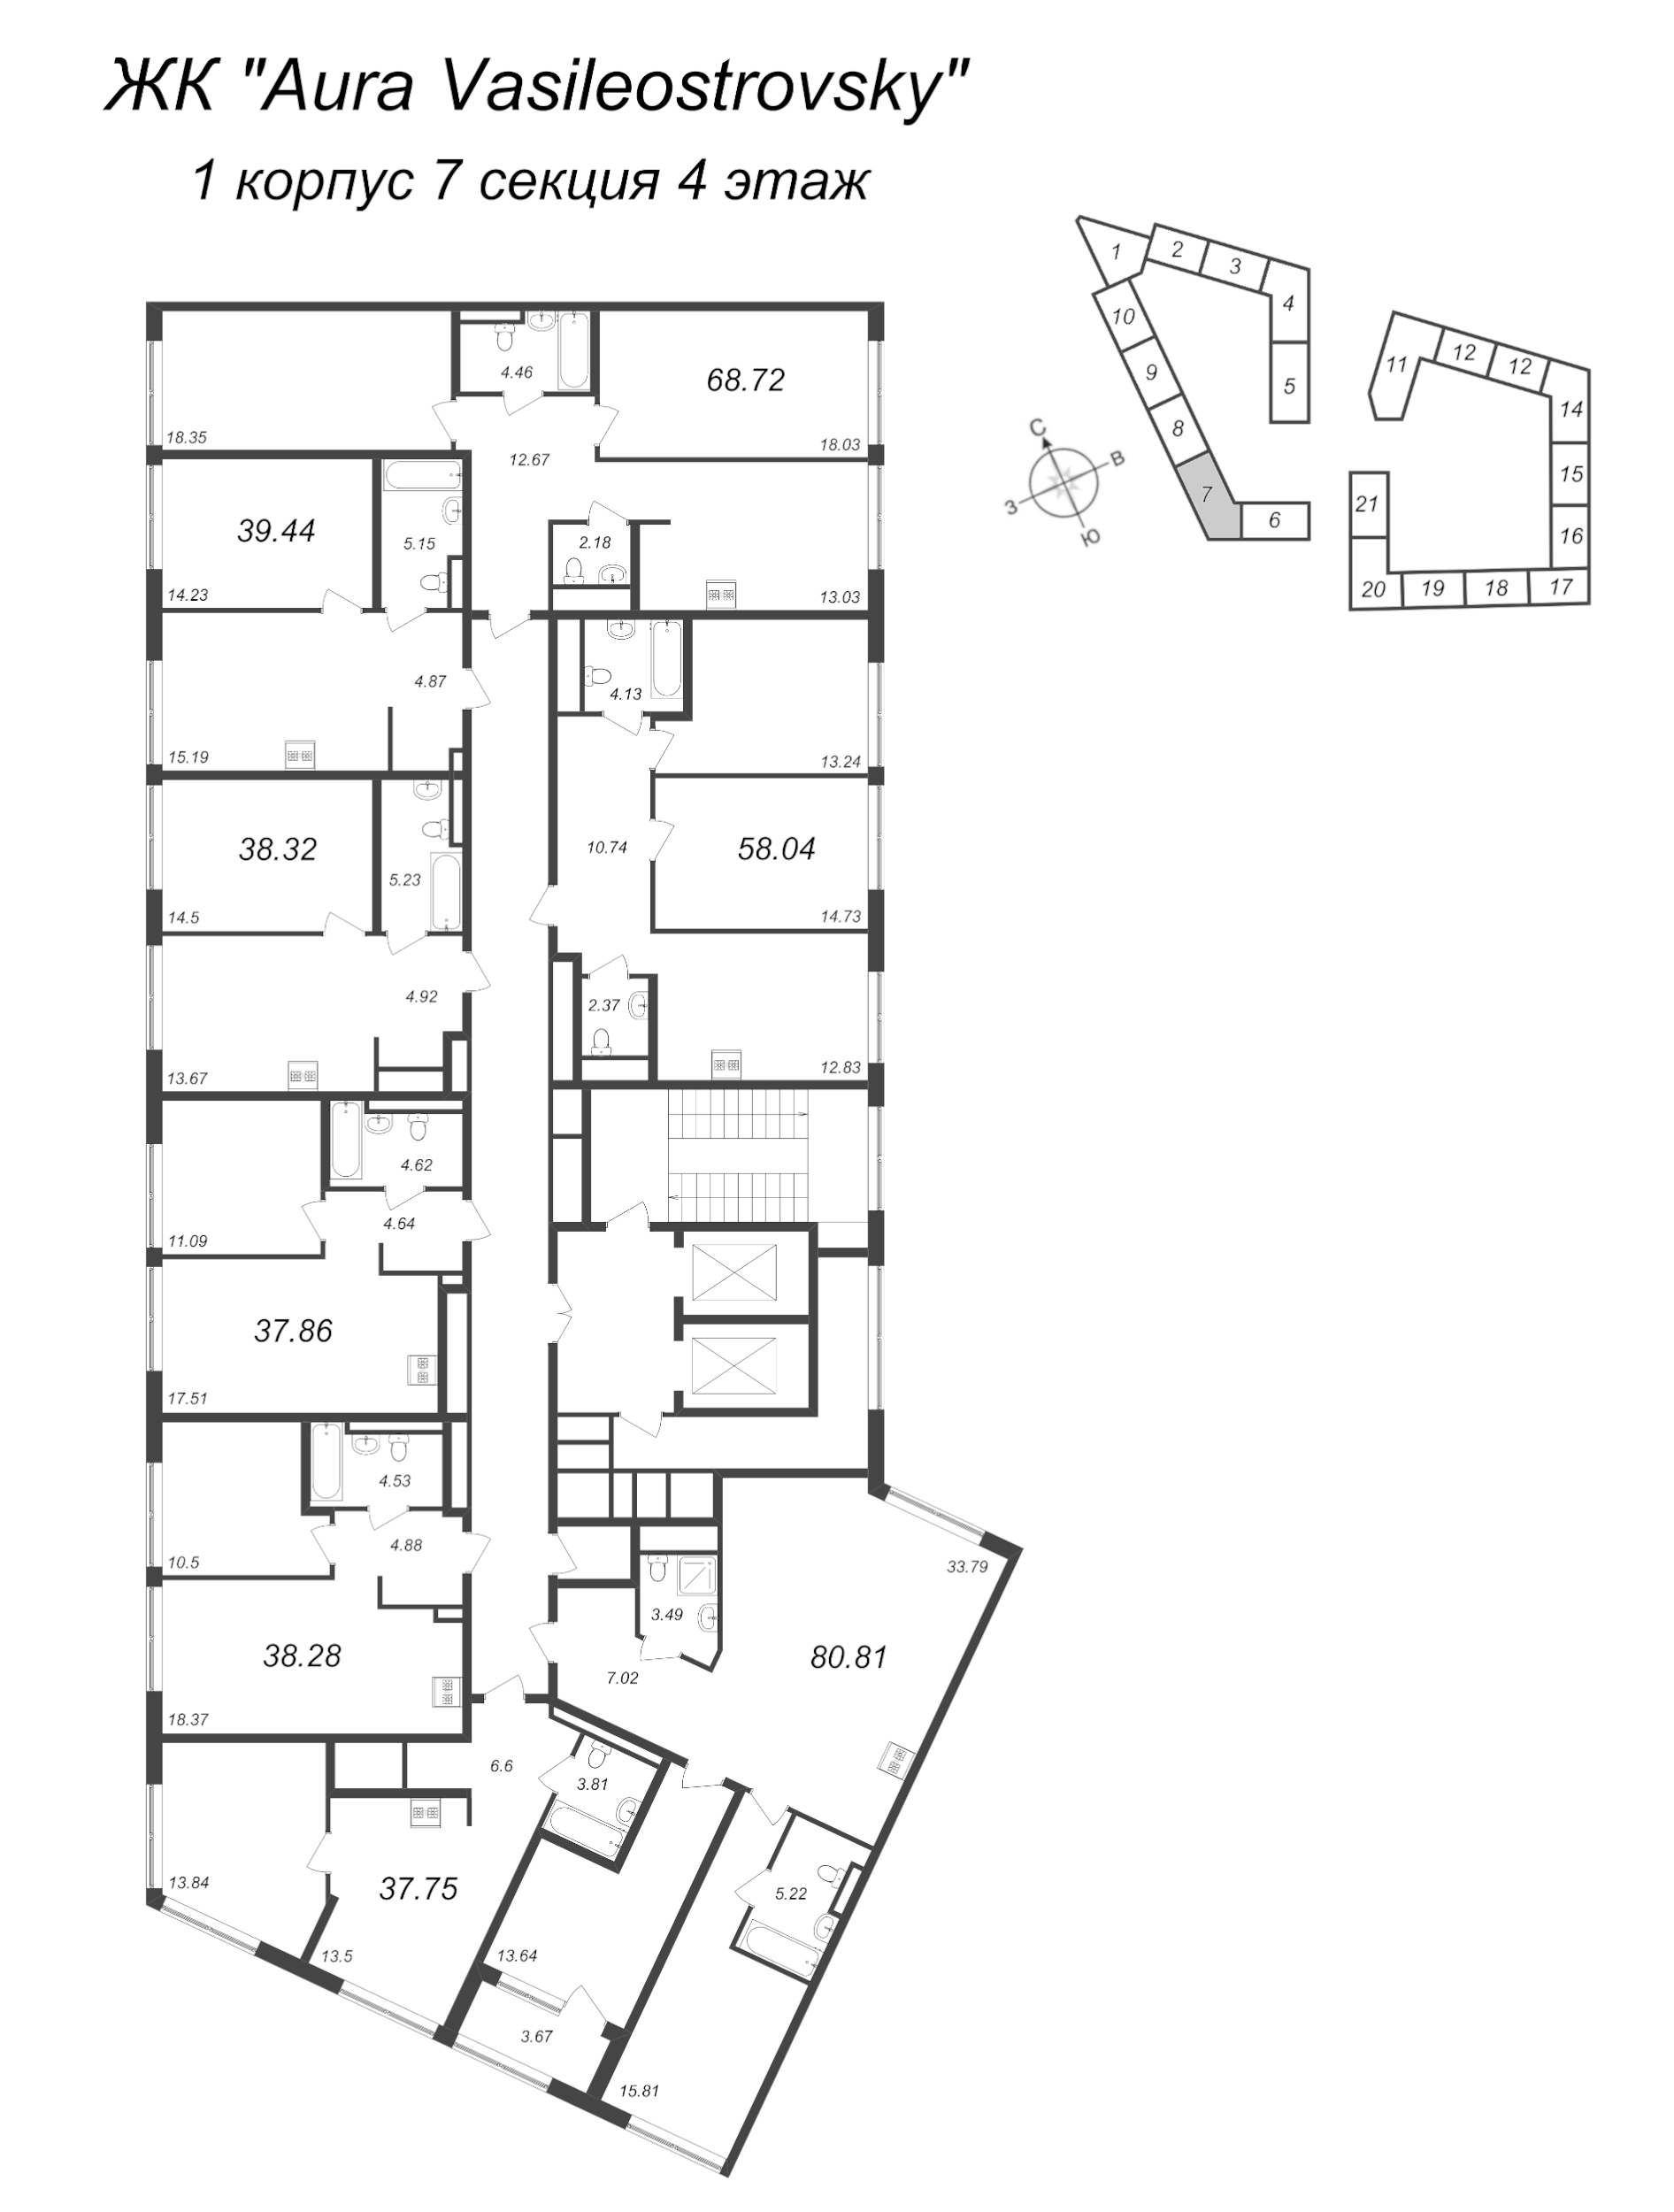 3-комнатная (Евро) квартира, 80.81 м² - планировка этажа